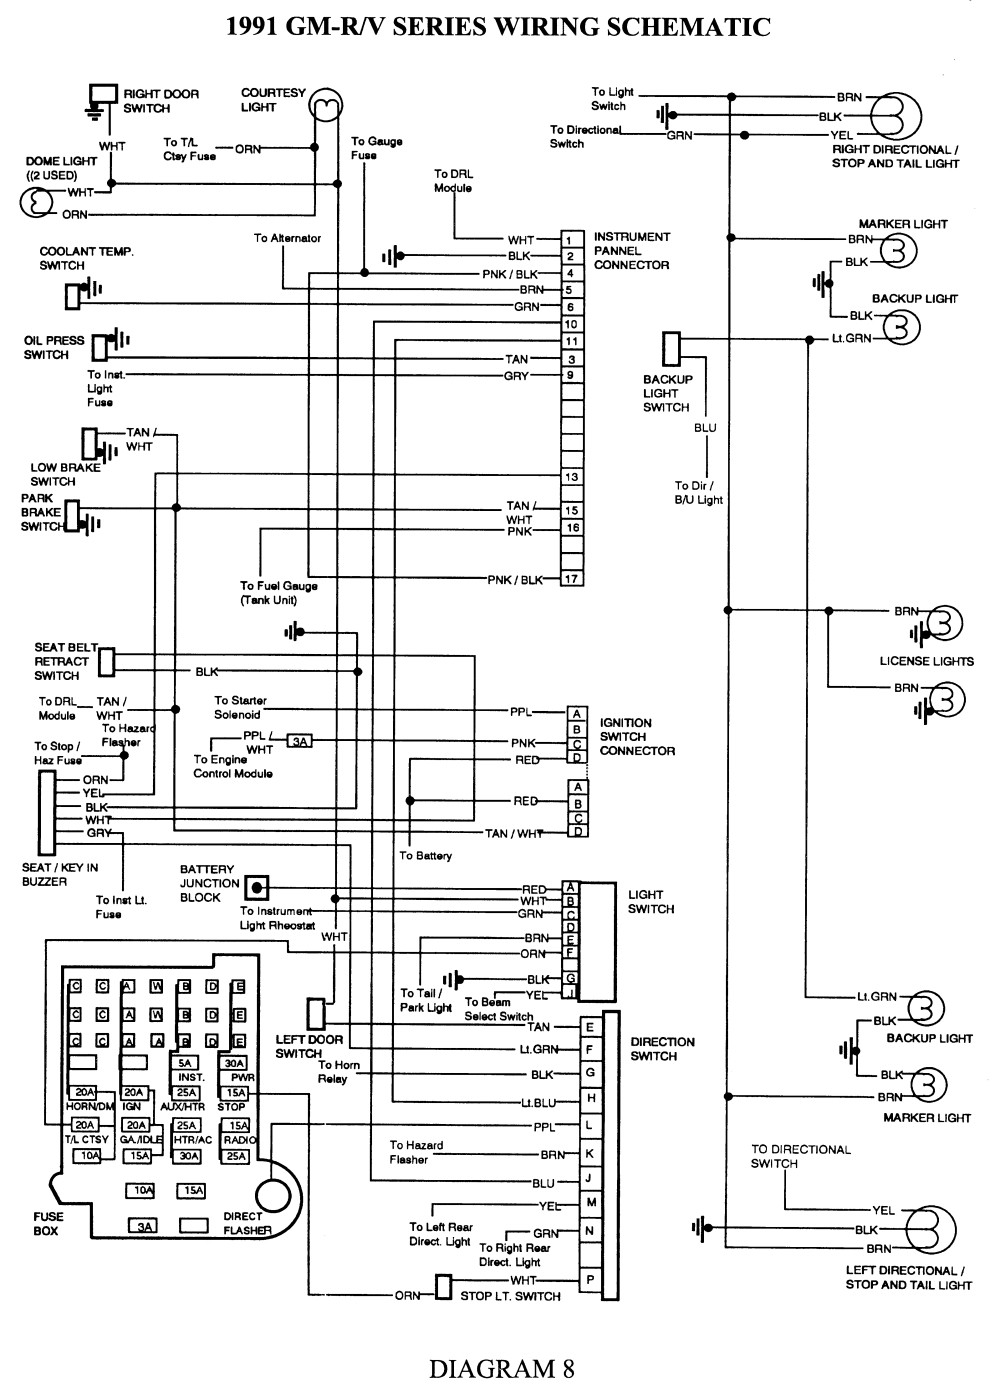 2005 chevy cavalier stereo wiring diagram gallery wiring diagram rh visithoustontexas org 2000 Chevy Cavalier Radio